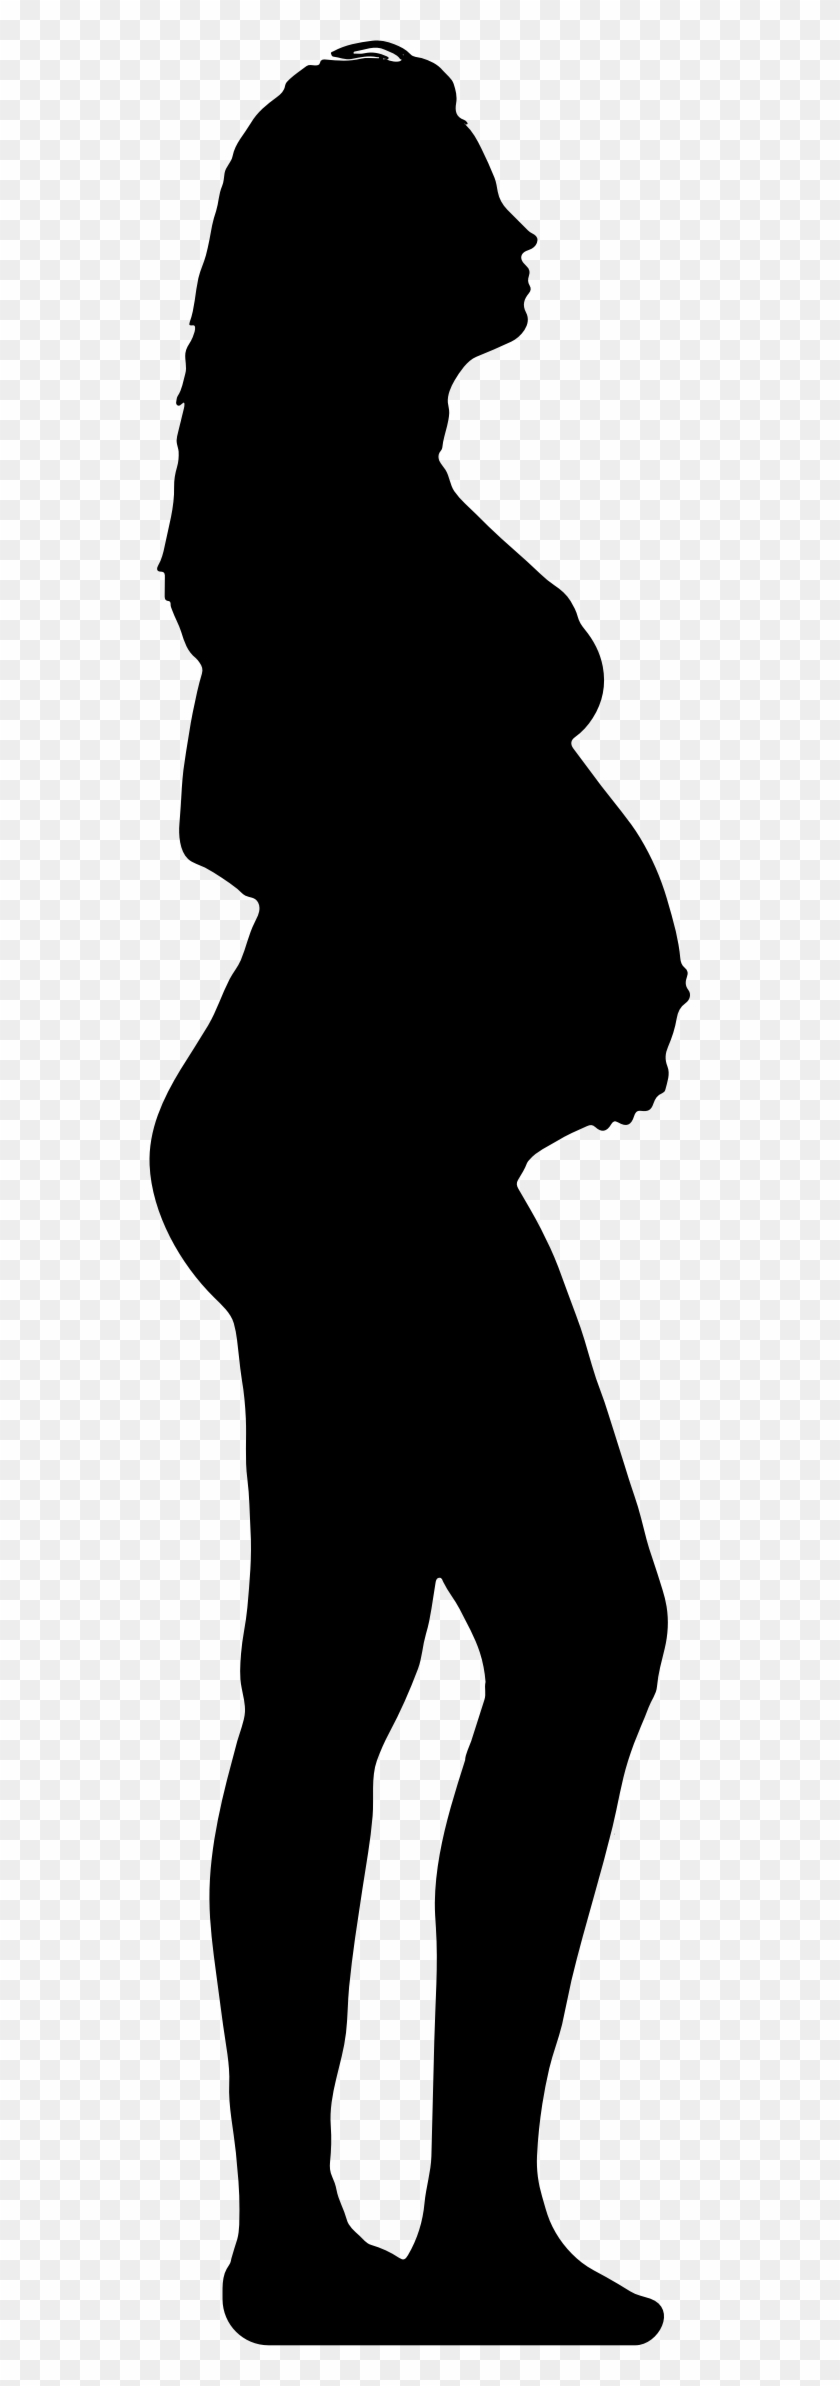 Clipart - Pregnant Silhouette No Background #683901